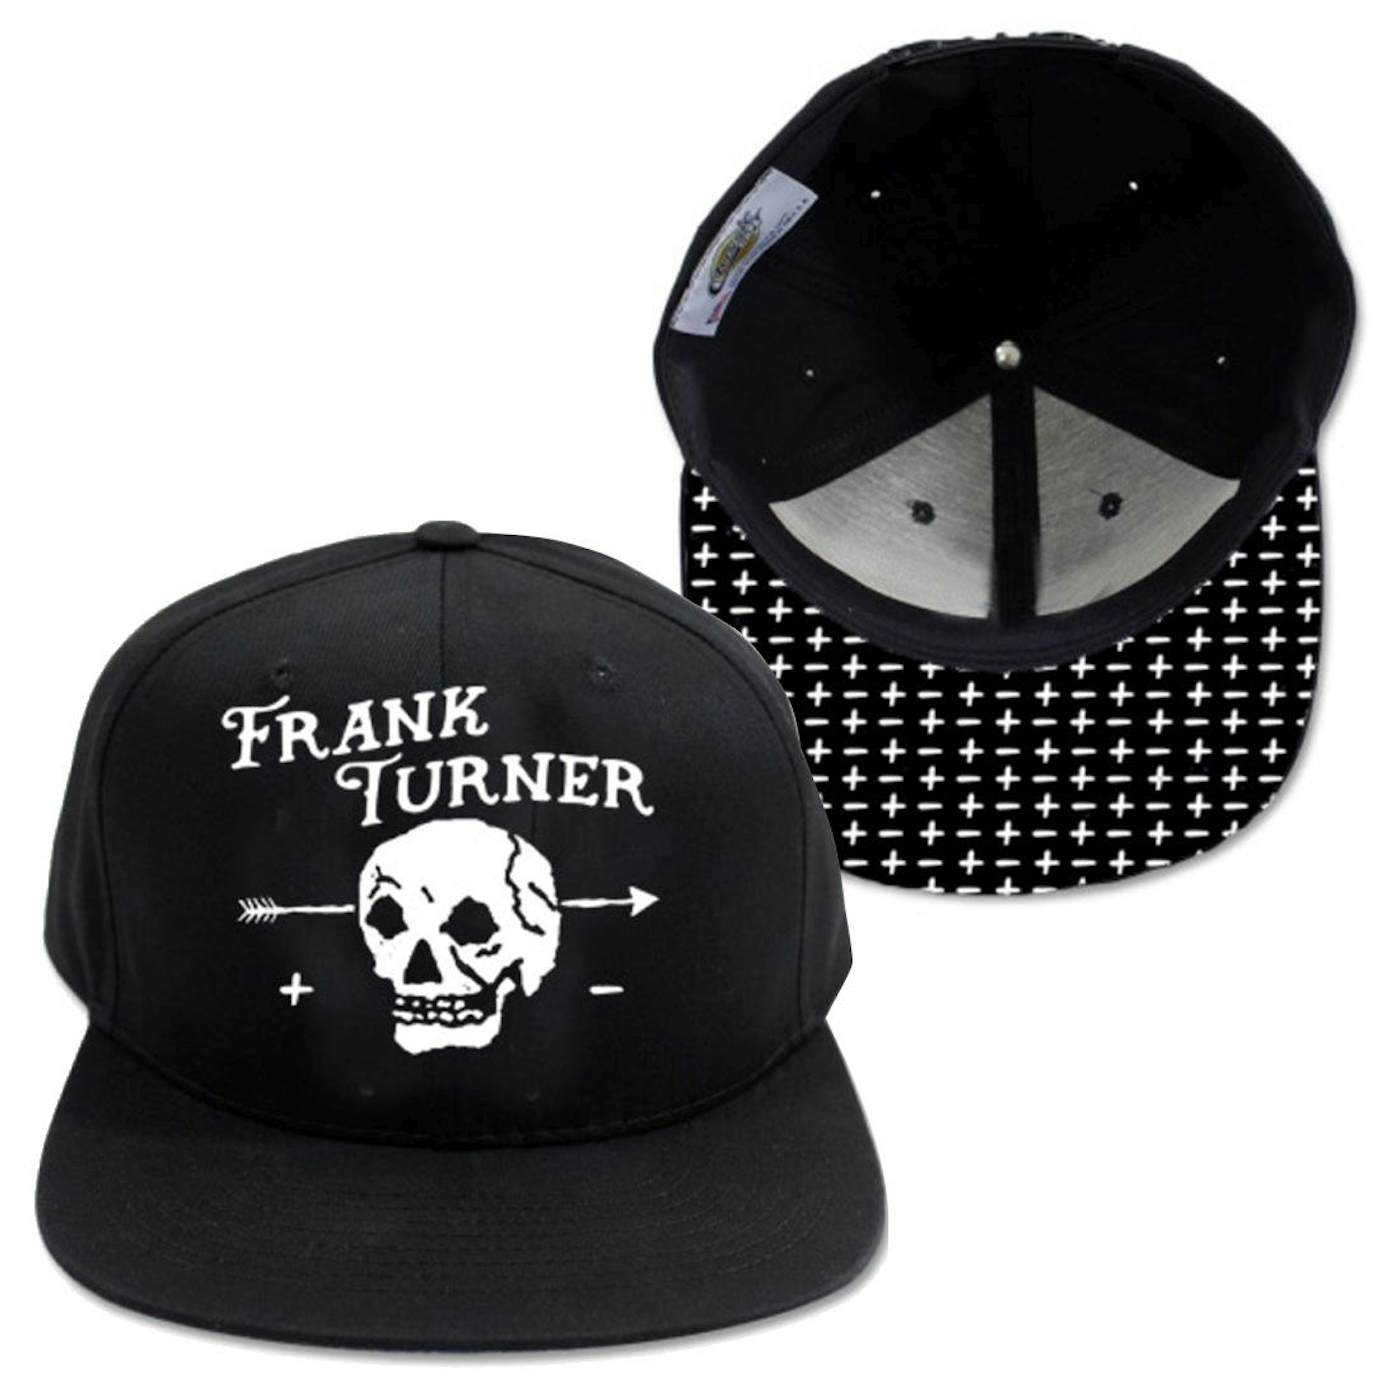 Frank Turner Skull Cap